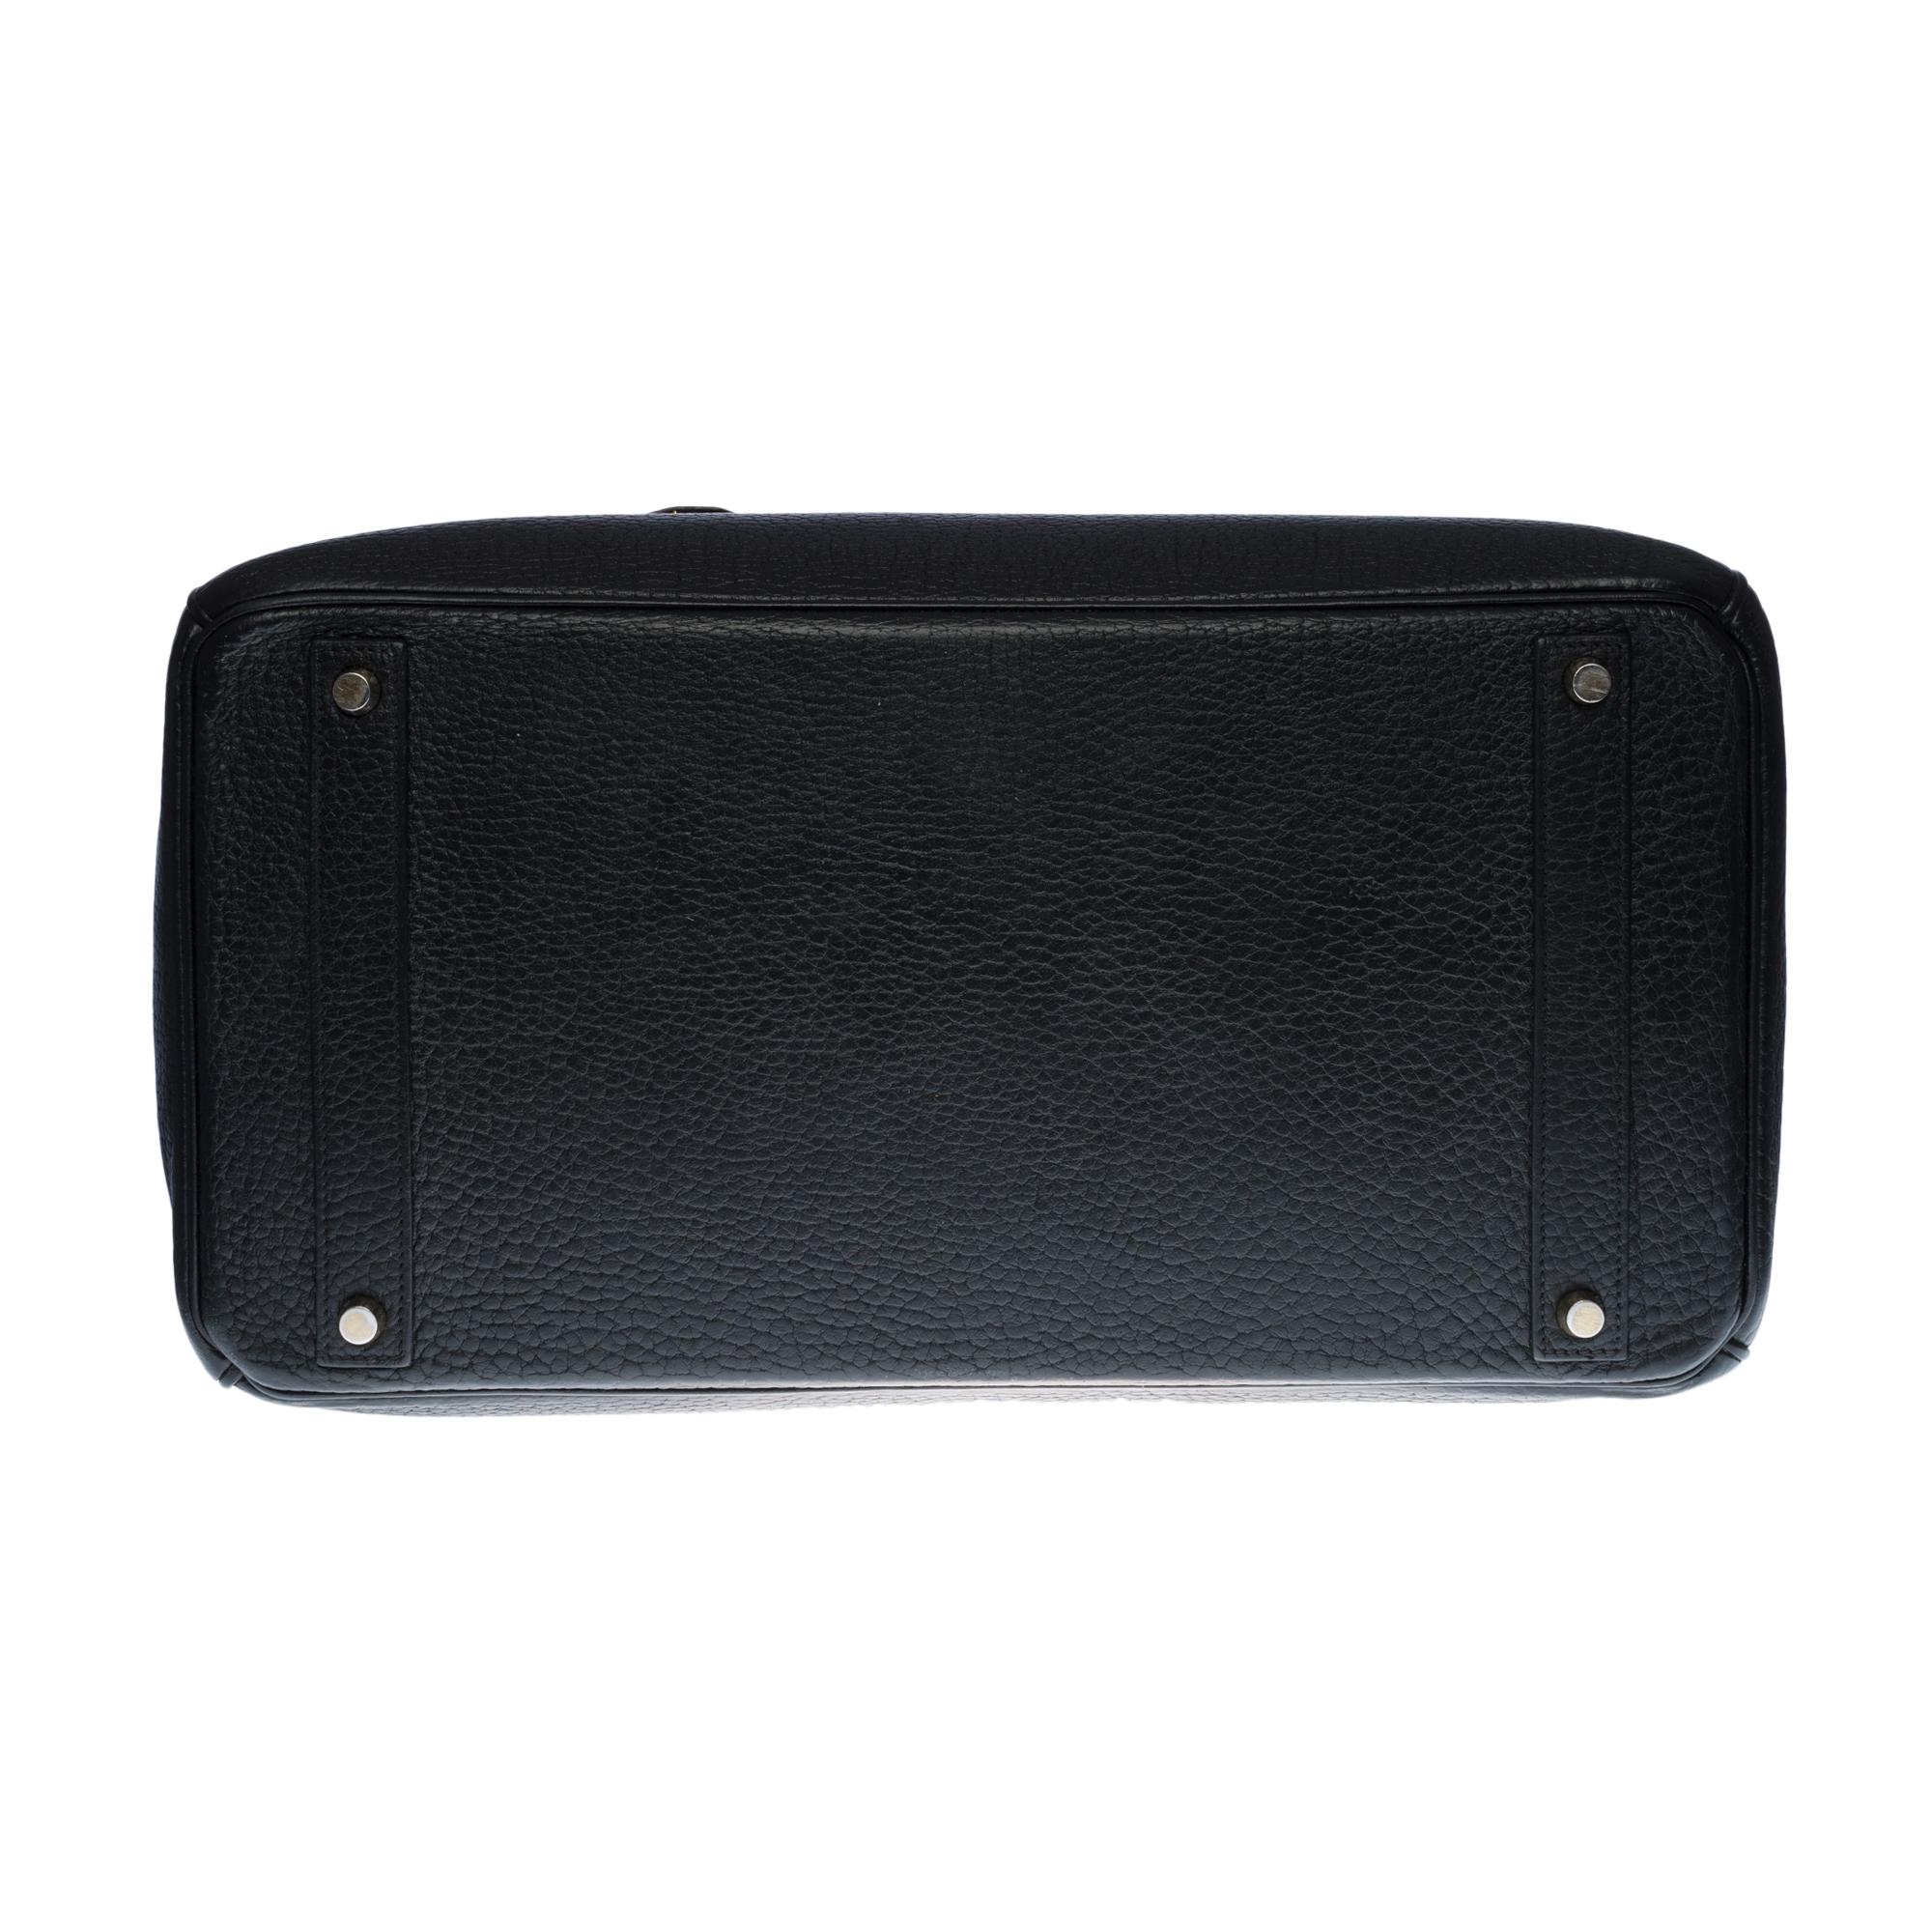 Stunning Hermes Birkin 40cm handbag in Black Togo leather, GHW 5